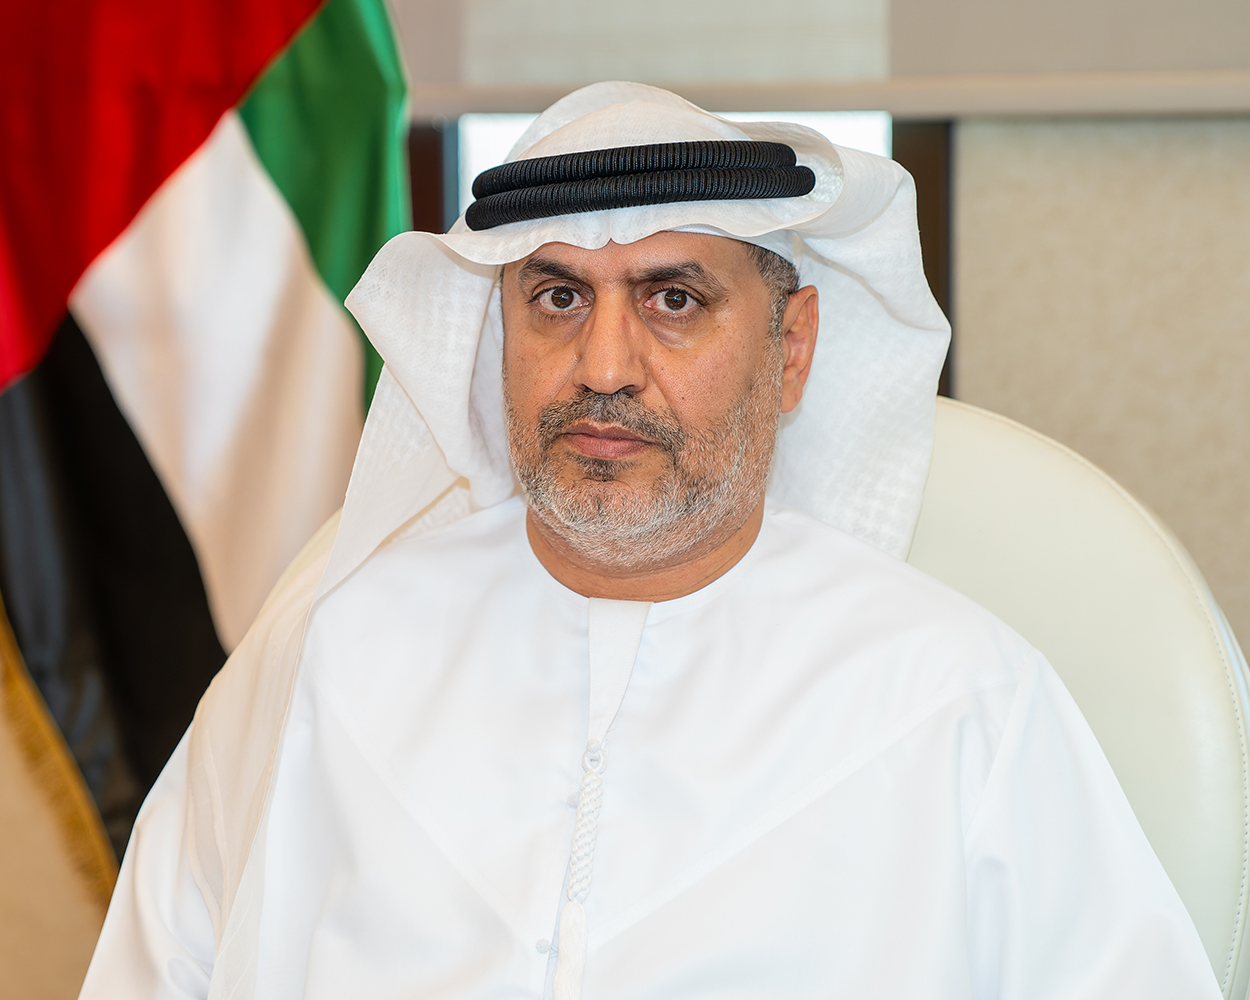 United Arab Emirates Ambassador to the State of Kuwait Matar Al-Nayadi